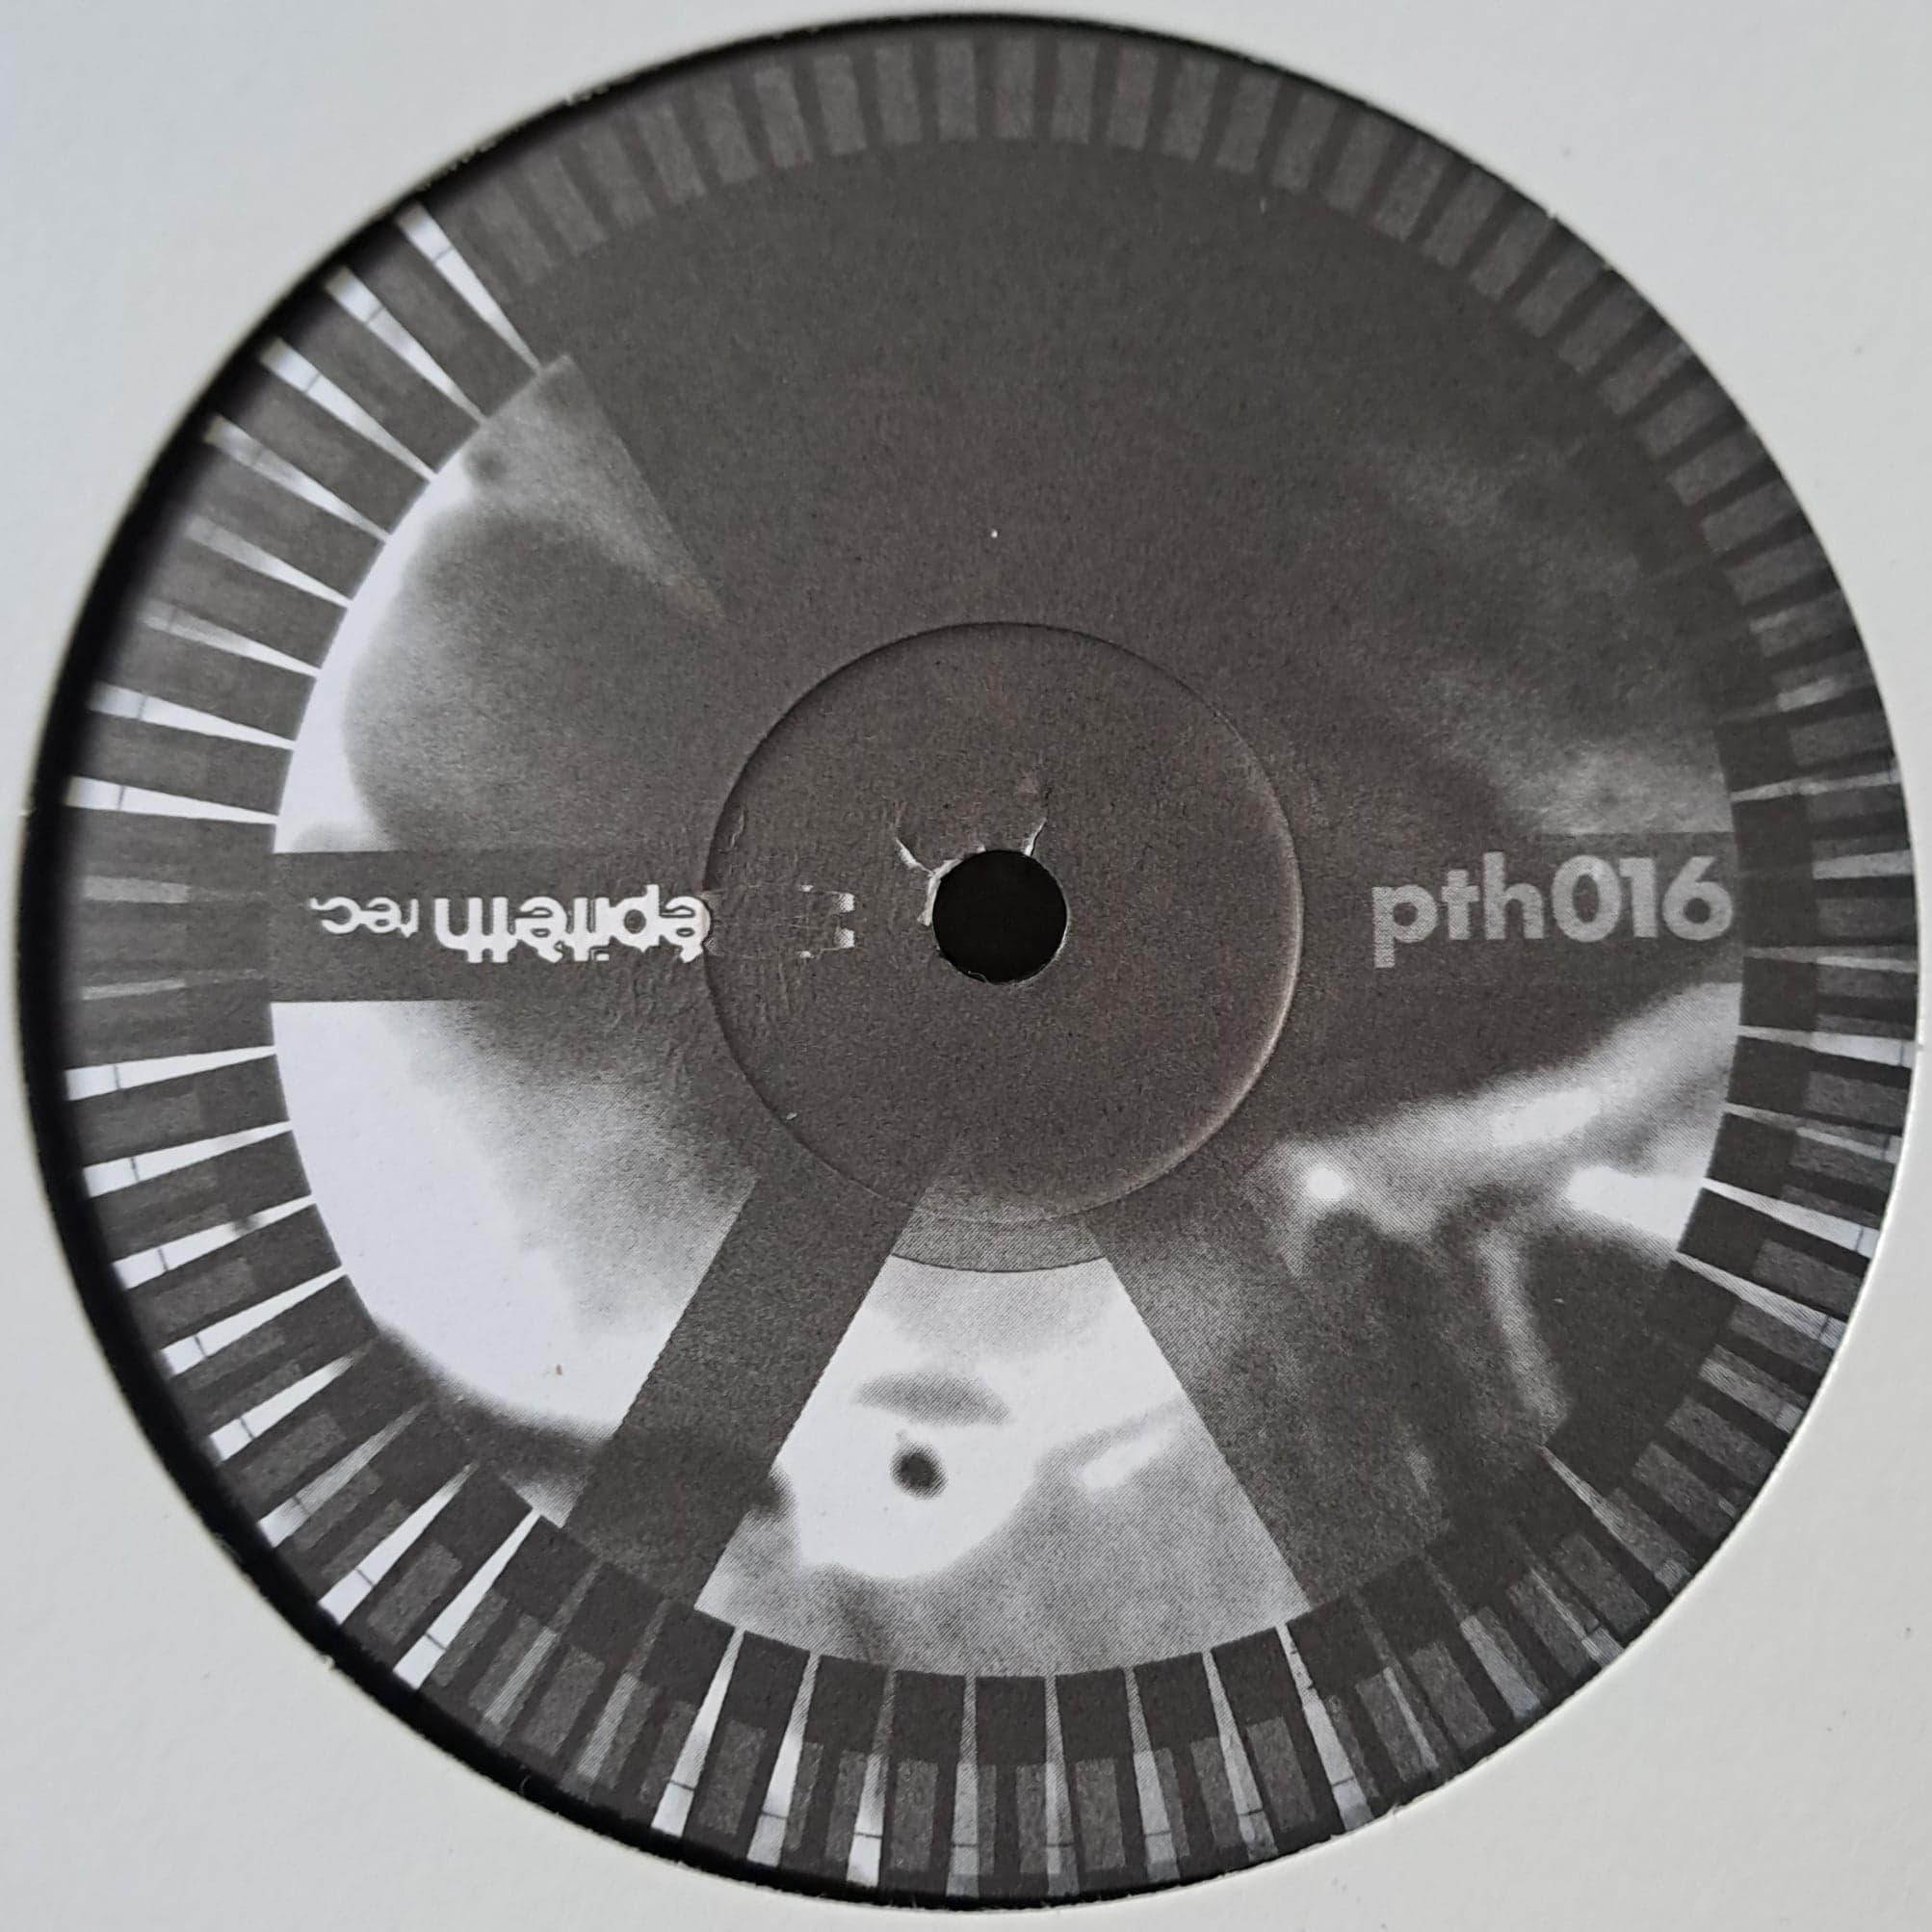 Epiteth 16 - vinyle hardcore